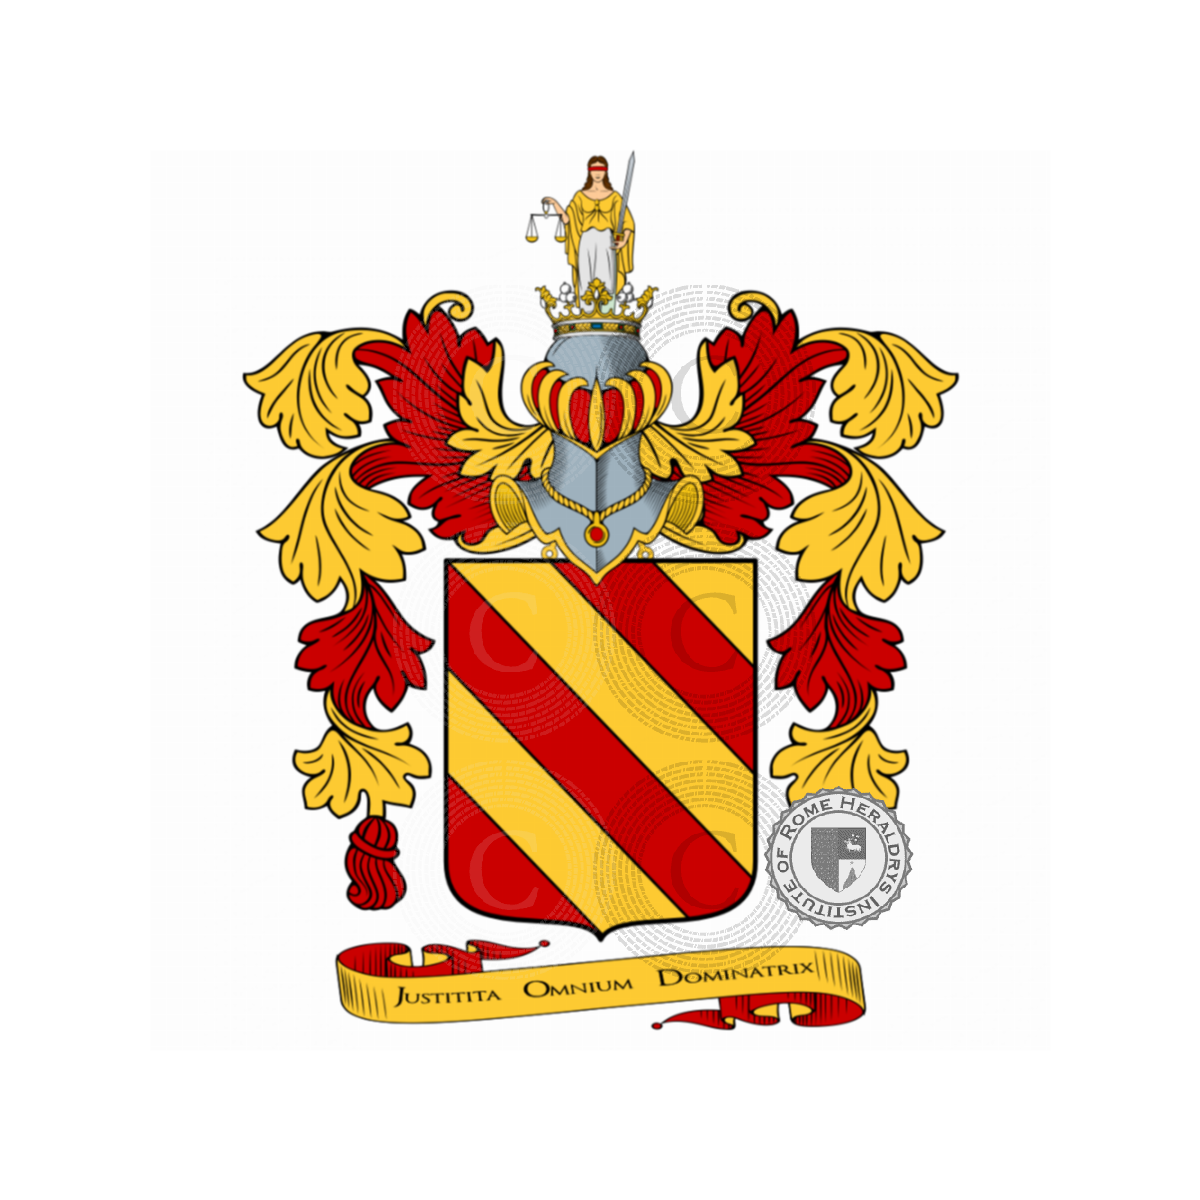 Wappen der FamilieGhisileri, Consiglieri,Ghisilieri,Ghislieri